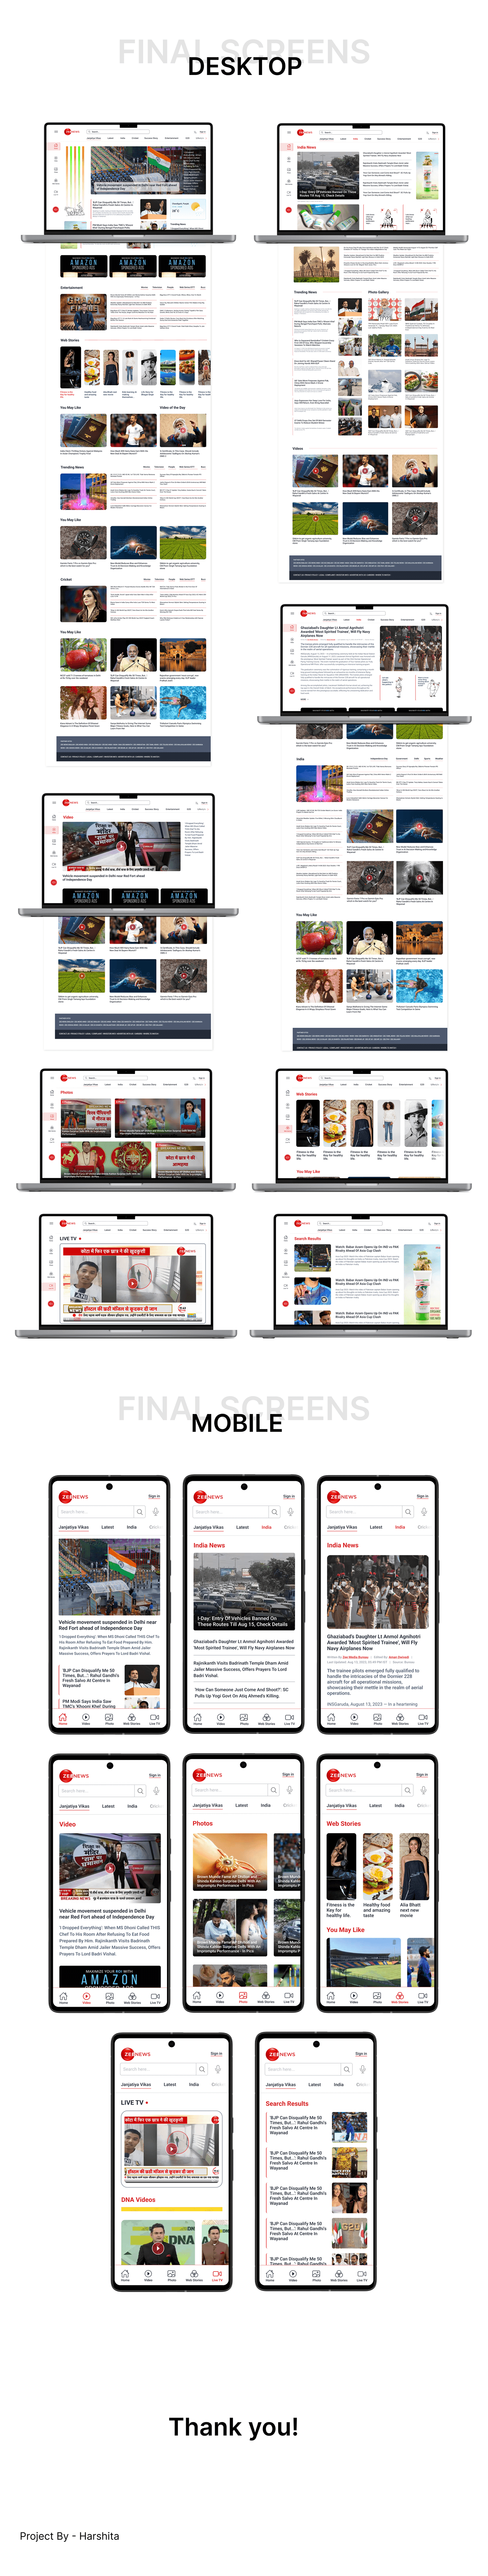 redesign website UI/UX ui design user interface Figma user experience app design mobile design